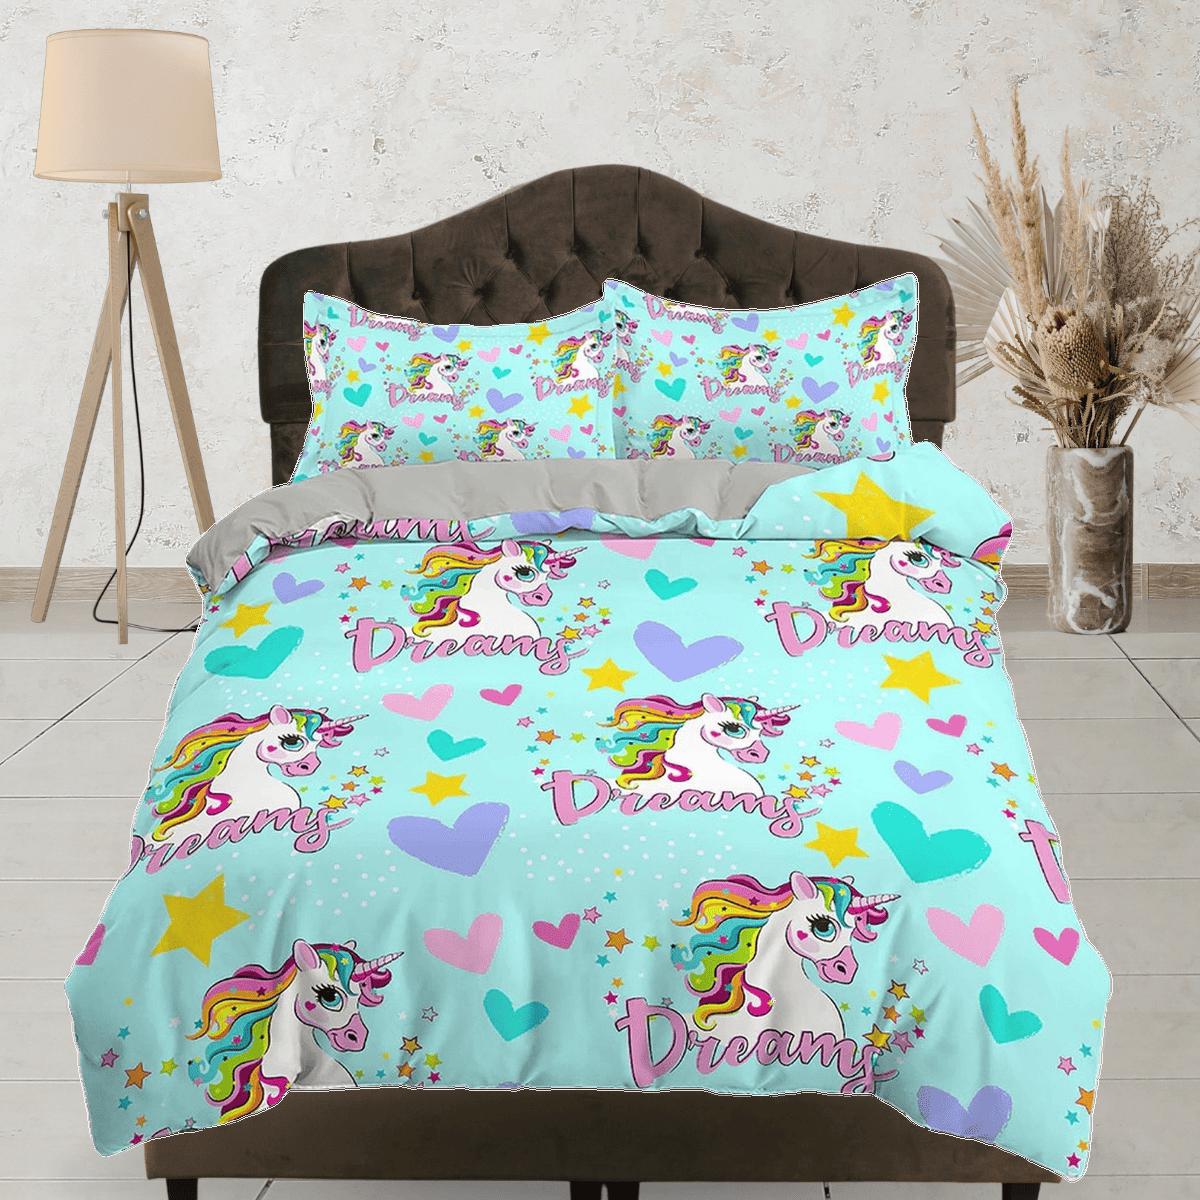 daintyduvet Dream unicorn, colorful toddler bedding, unique duvet cover for nursery kids, crib bedding, baby zipper bedding, king queen full twin